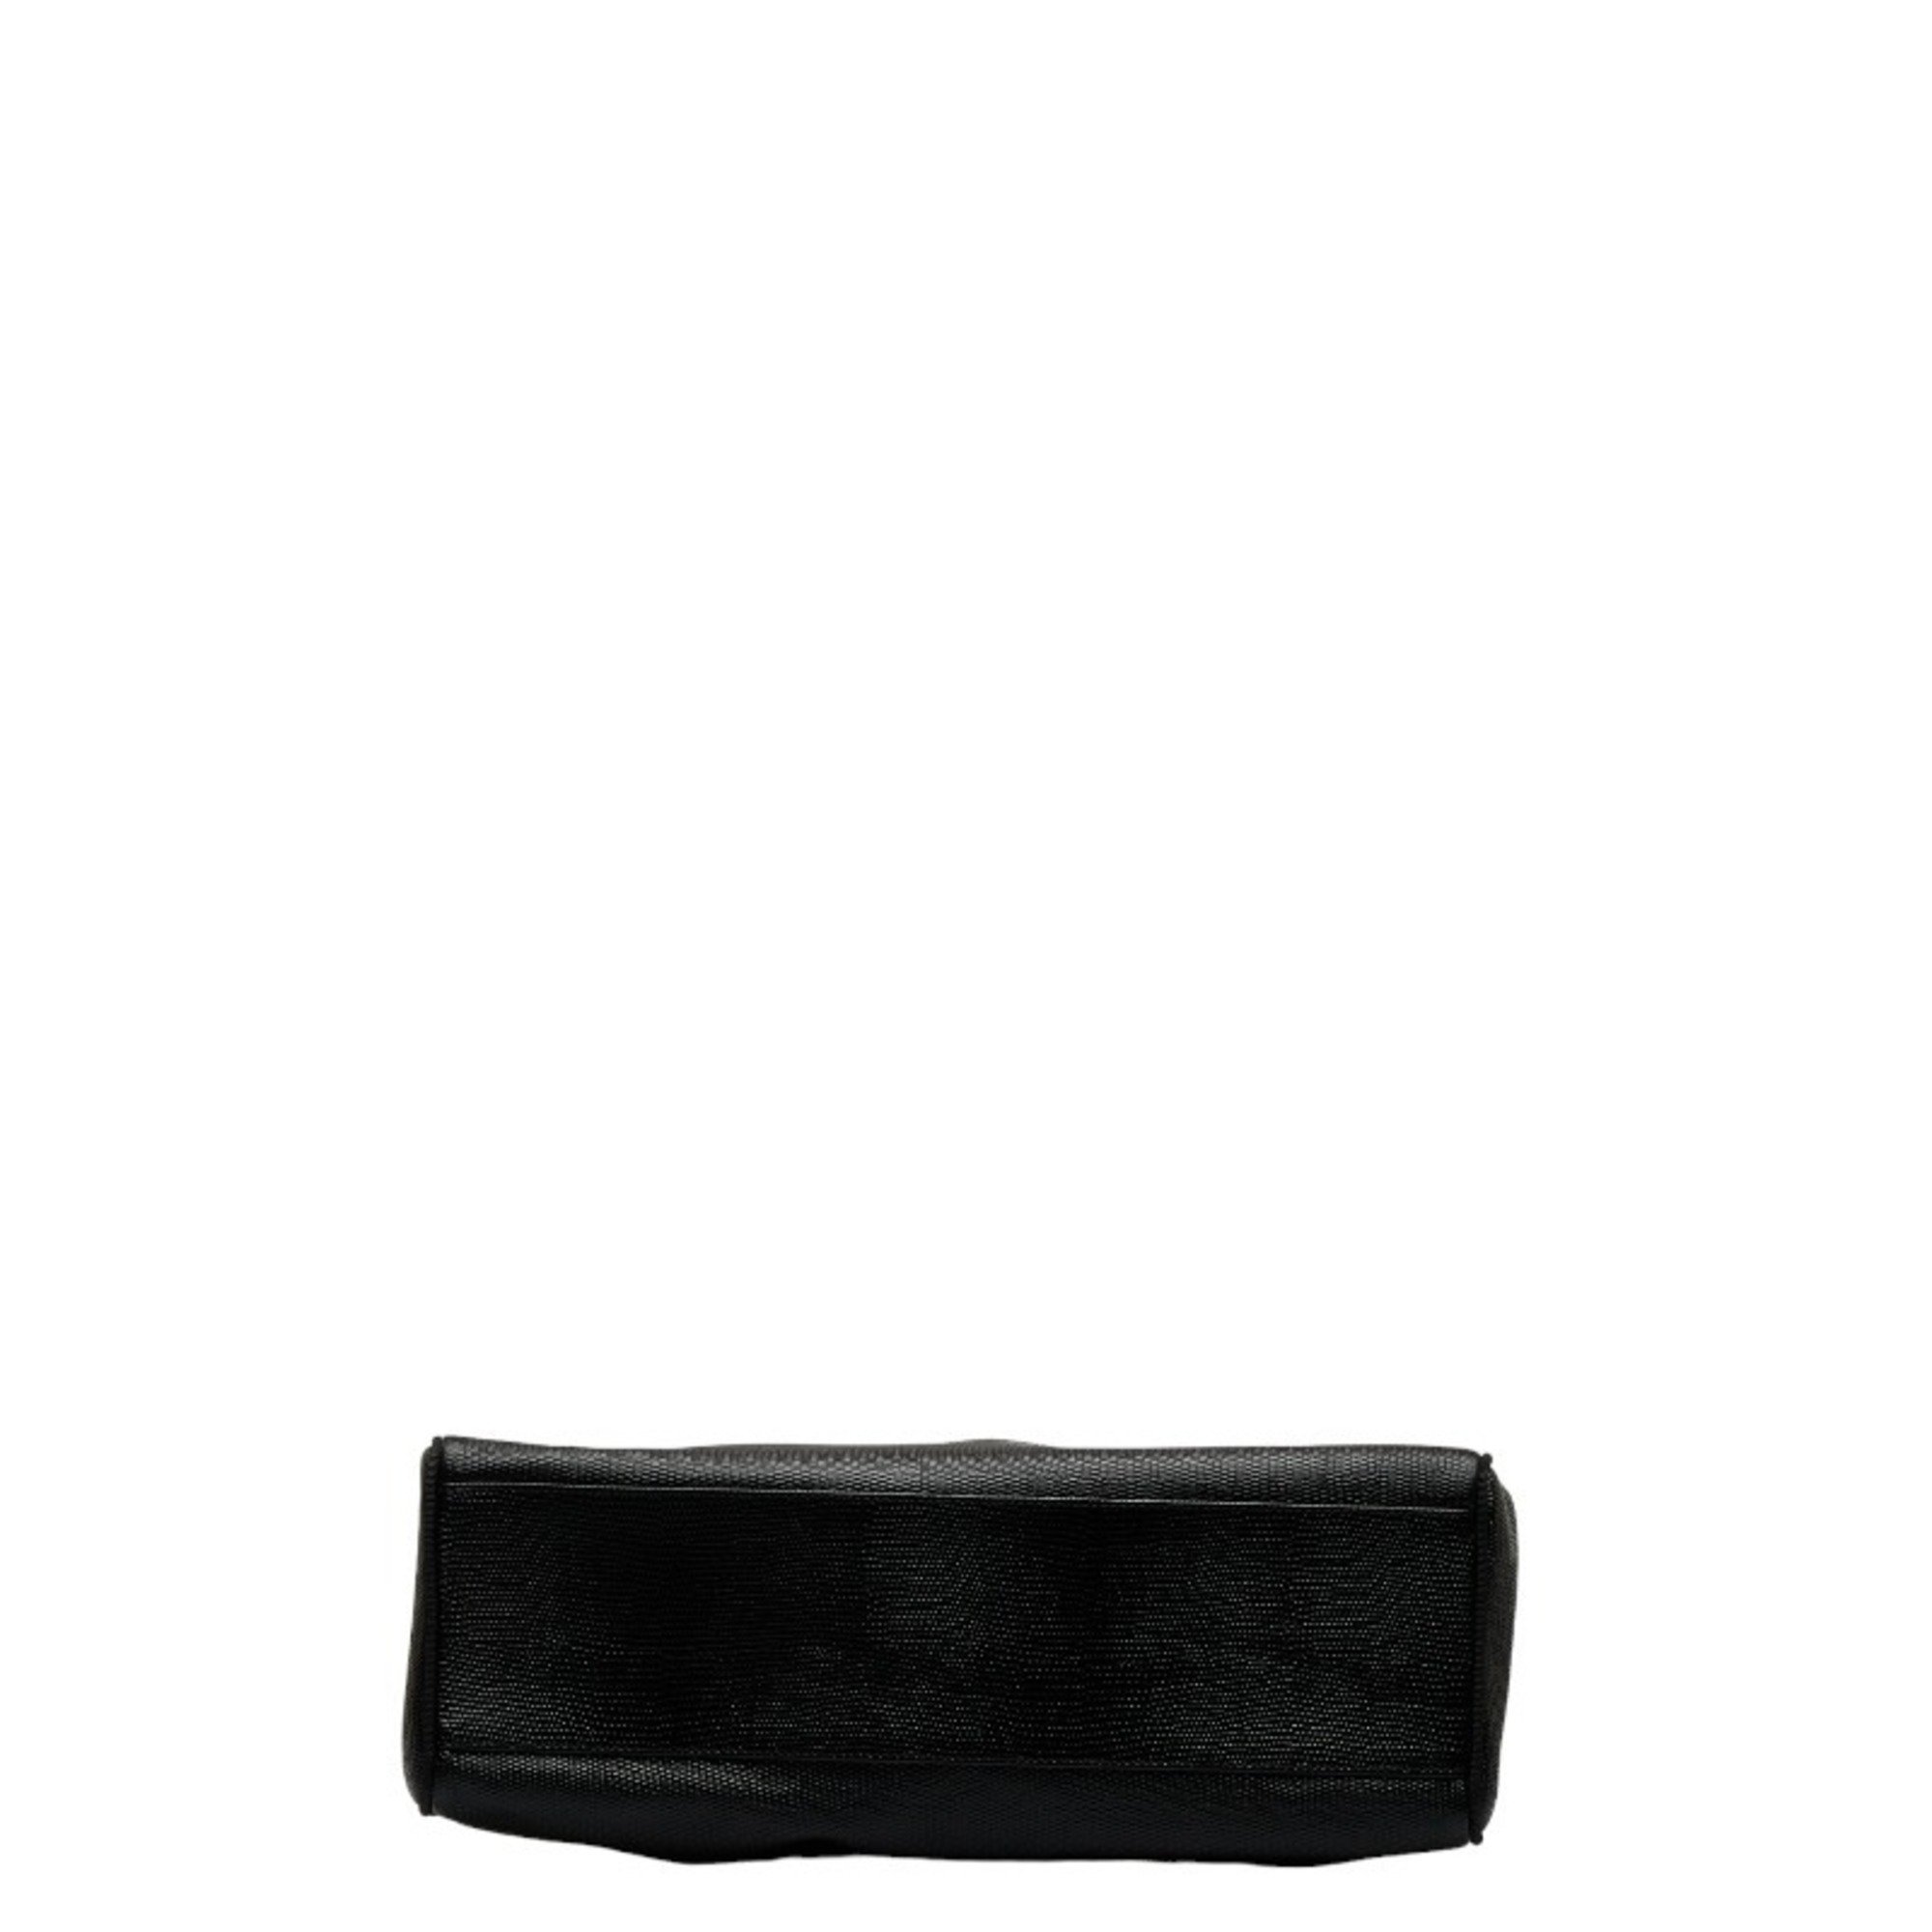 Salvatore Ferragamo Vara Tote Bag BK-21 2530 Black Leather Women's